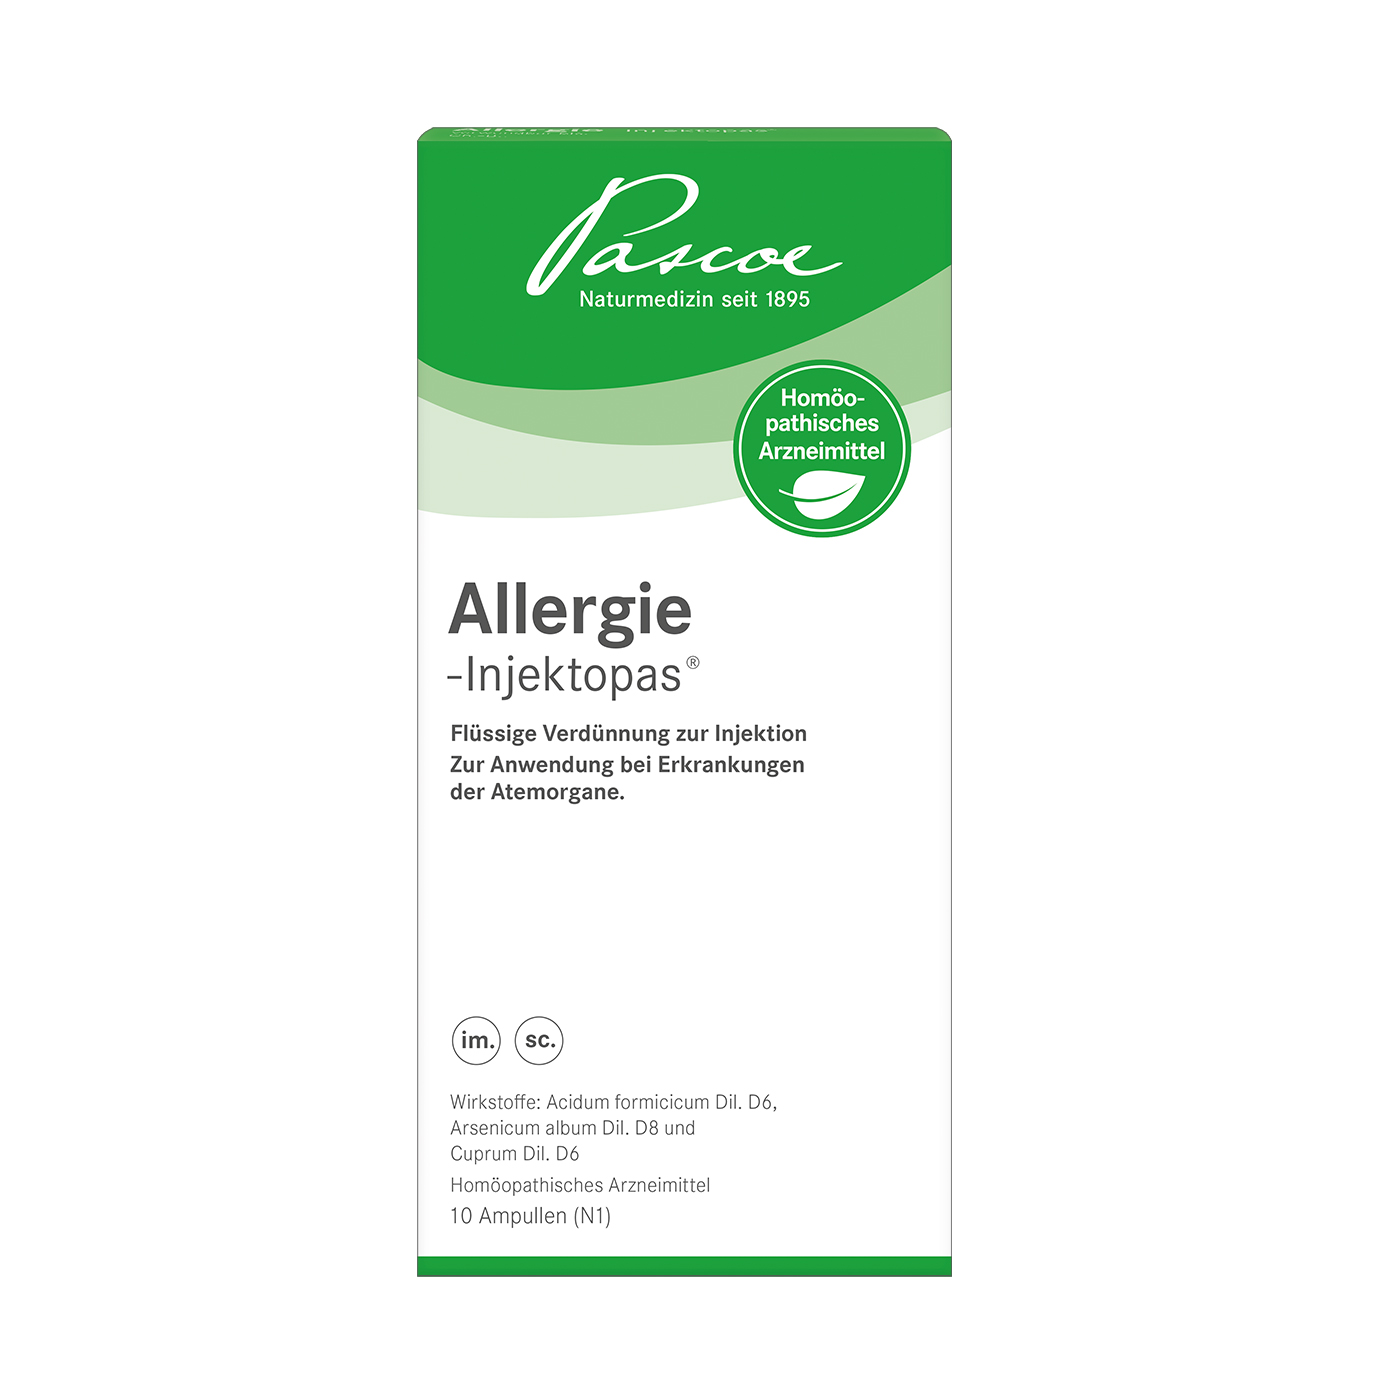 Allergie-InjektopasAllergie-Injektopas